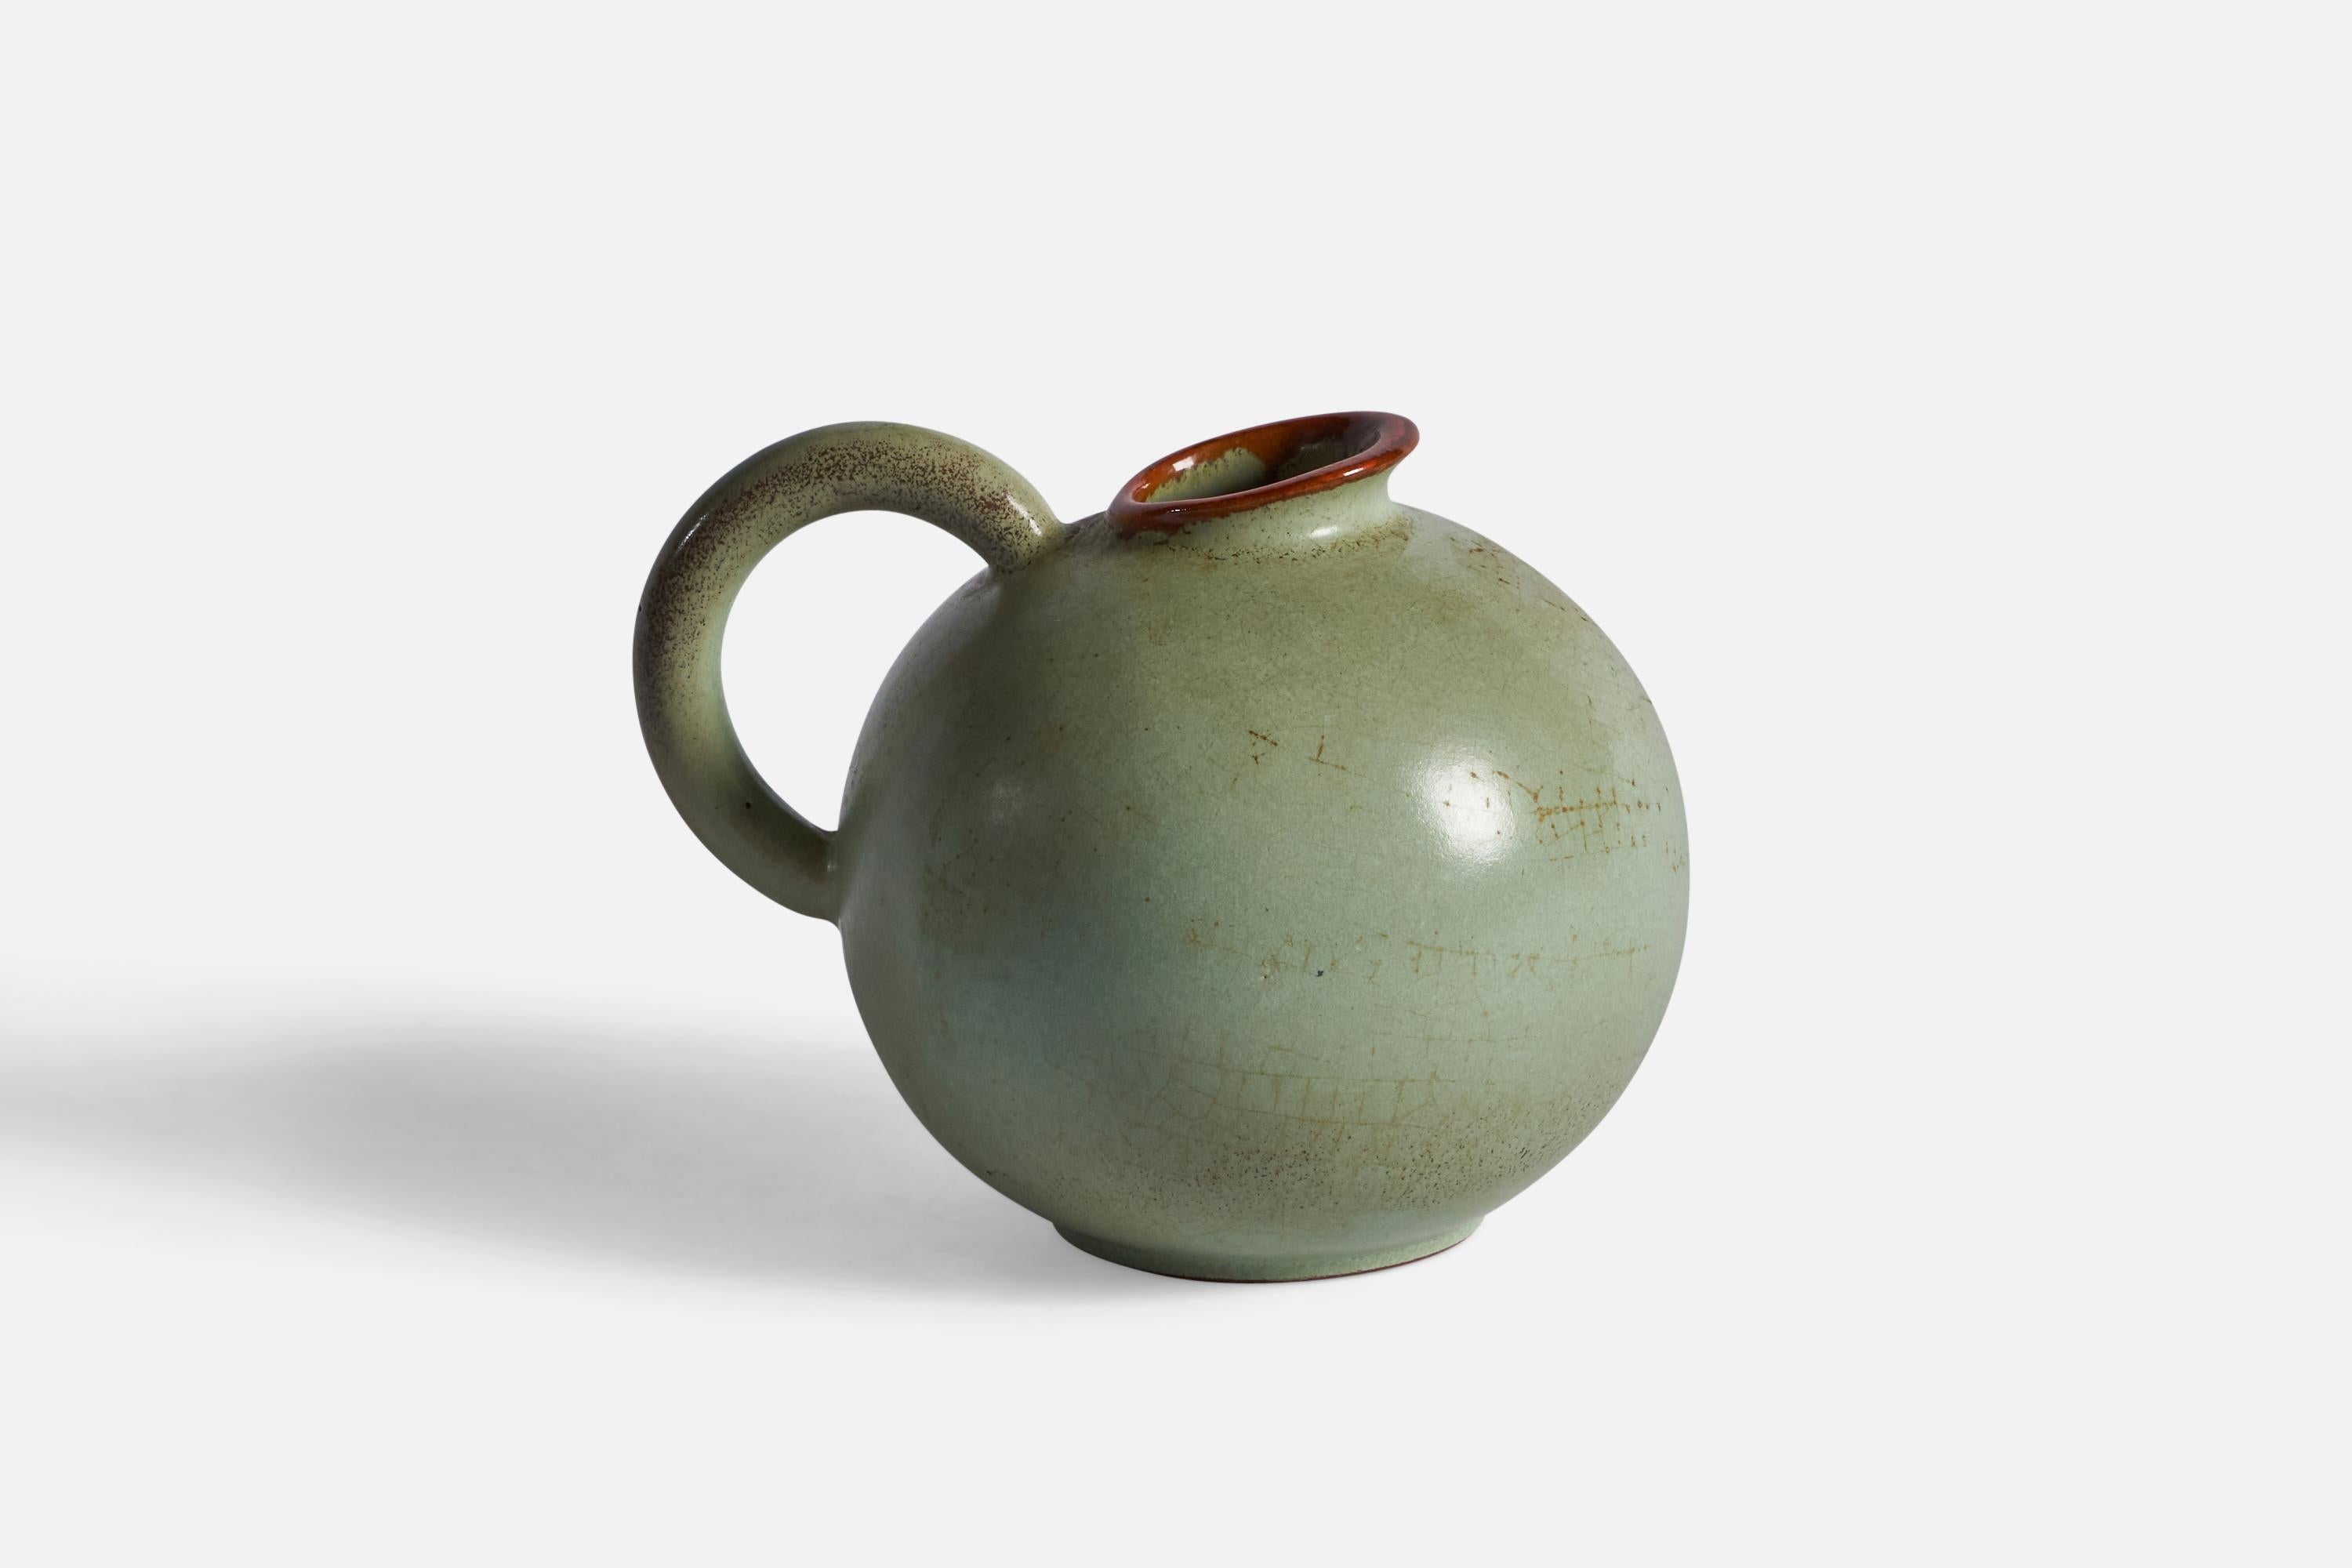 A green-glazed earthenware pitcher or vase, designed and produced by Gabriel Keramik, Sweden, c. 1930s.